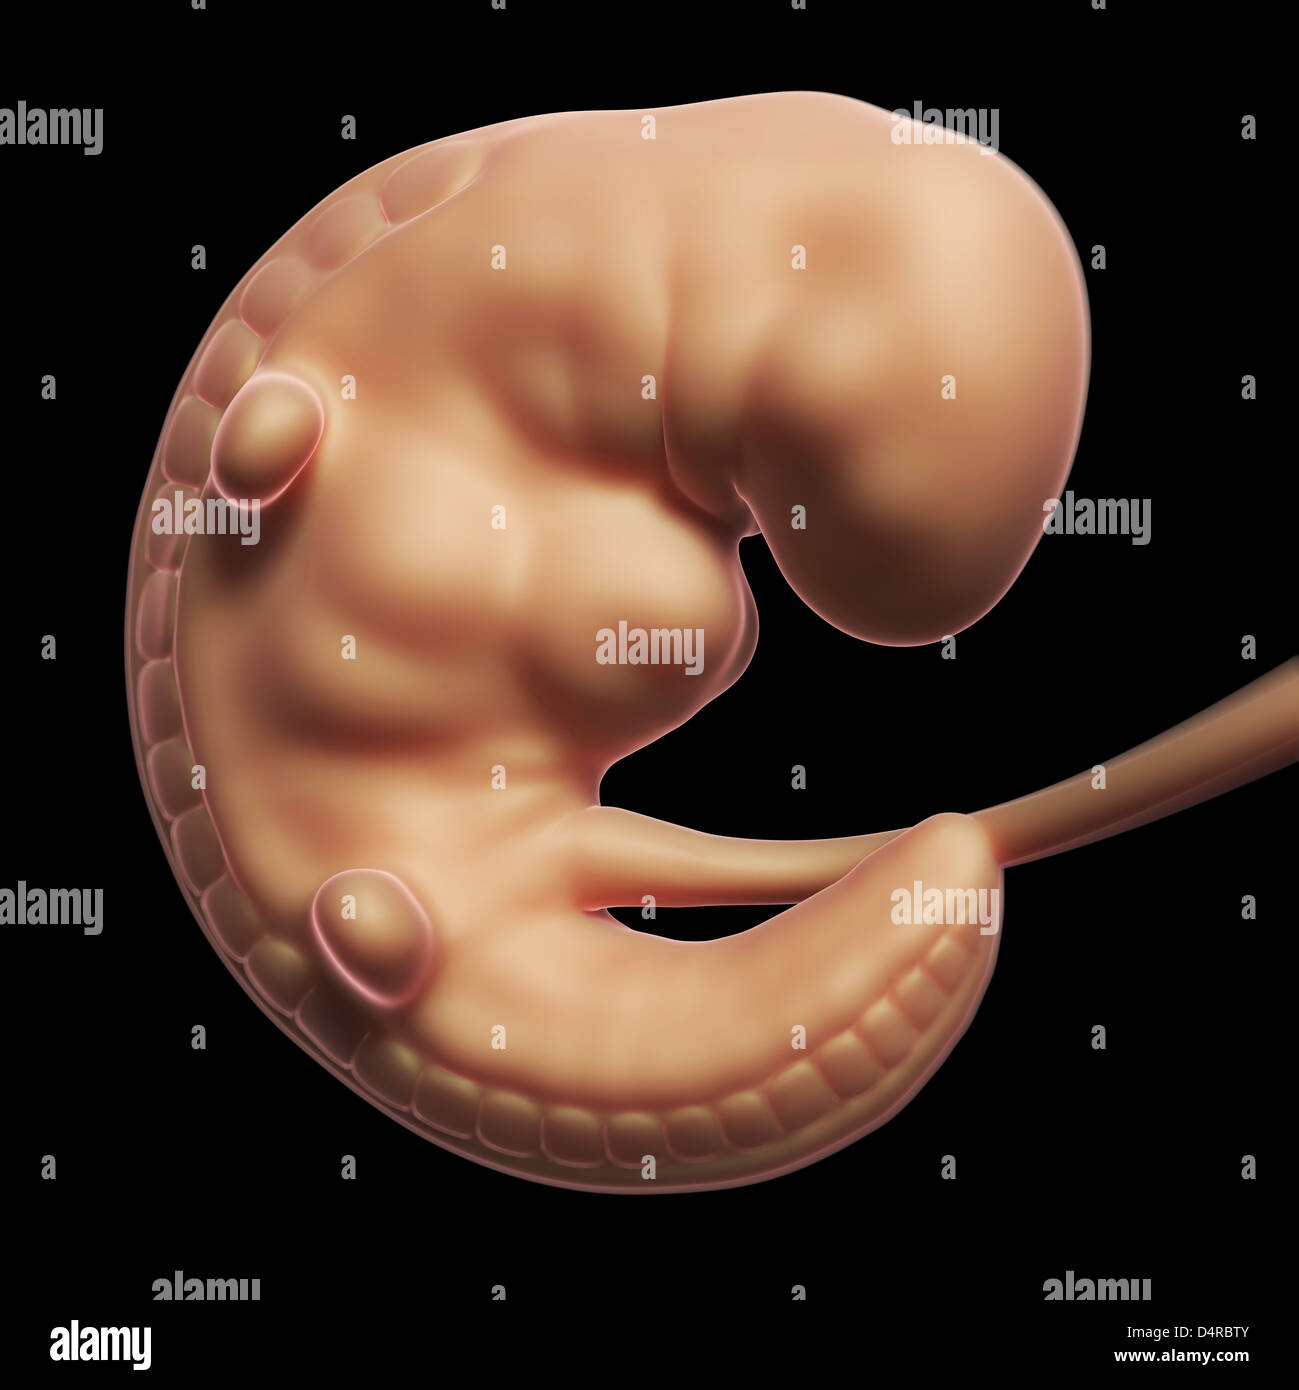 Human fetus - month 1 Stock Photo